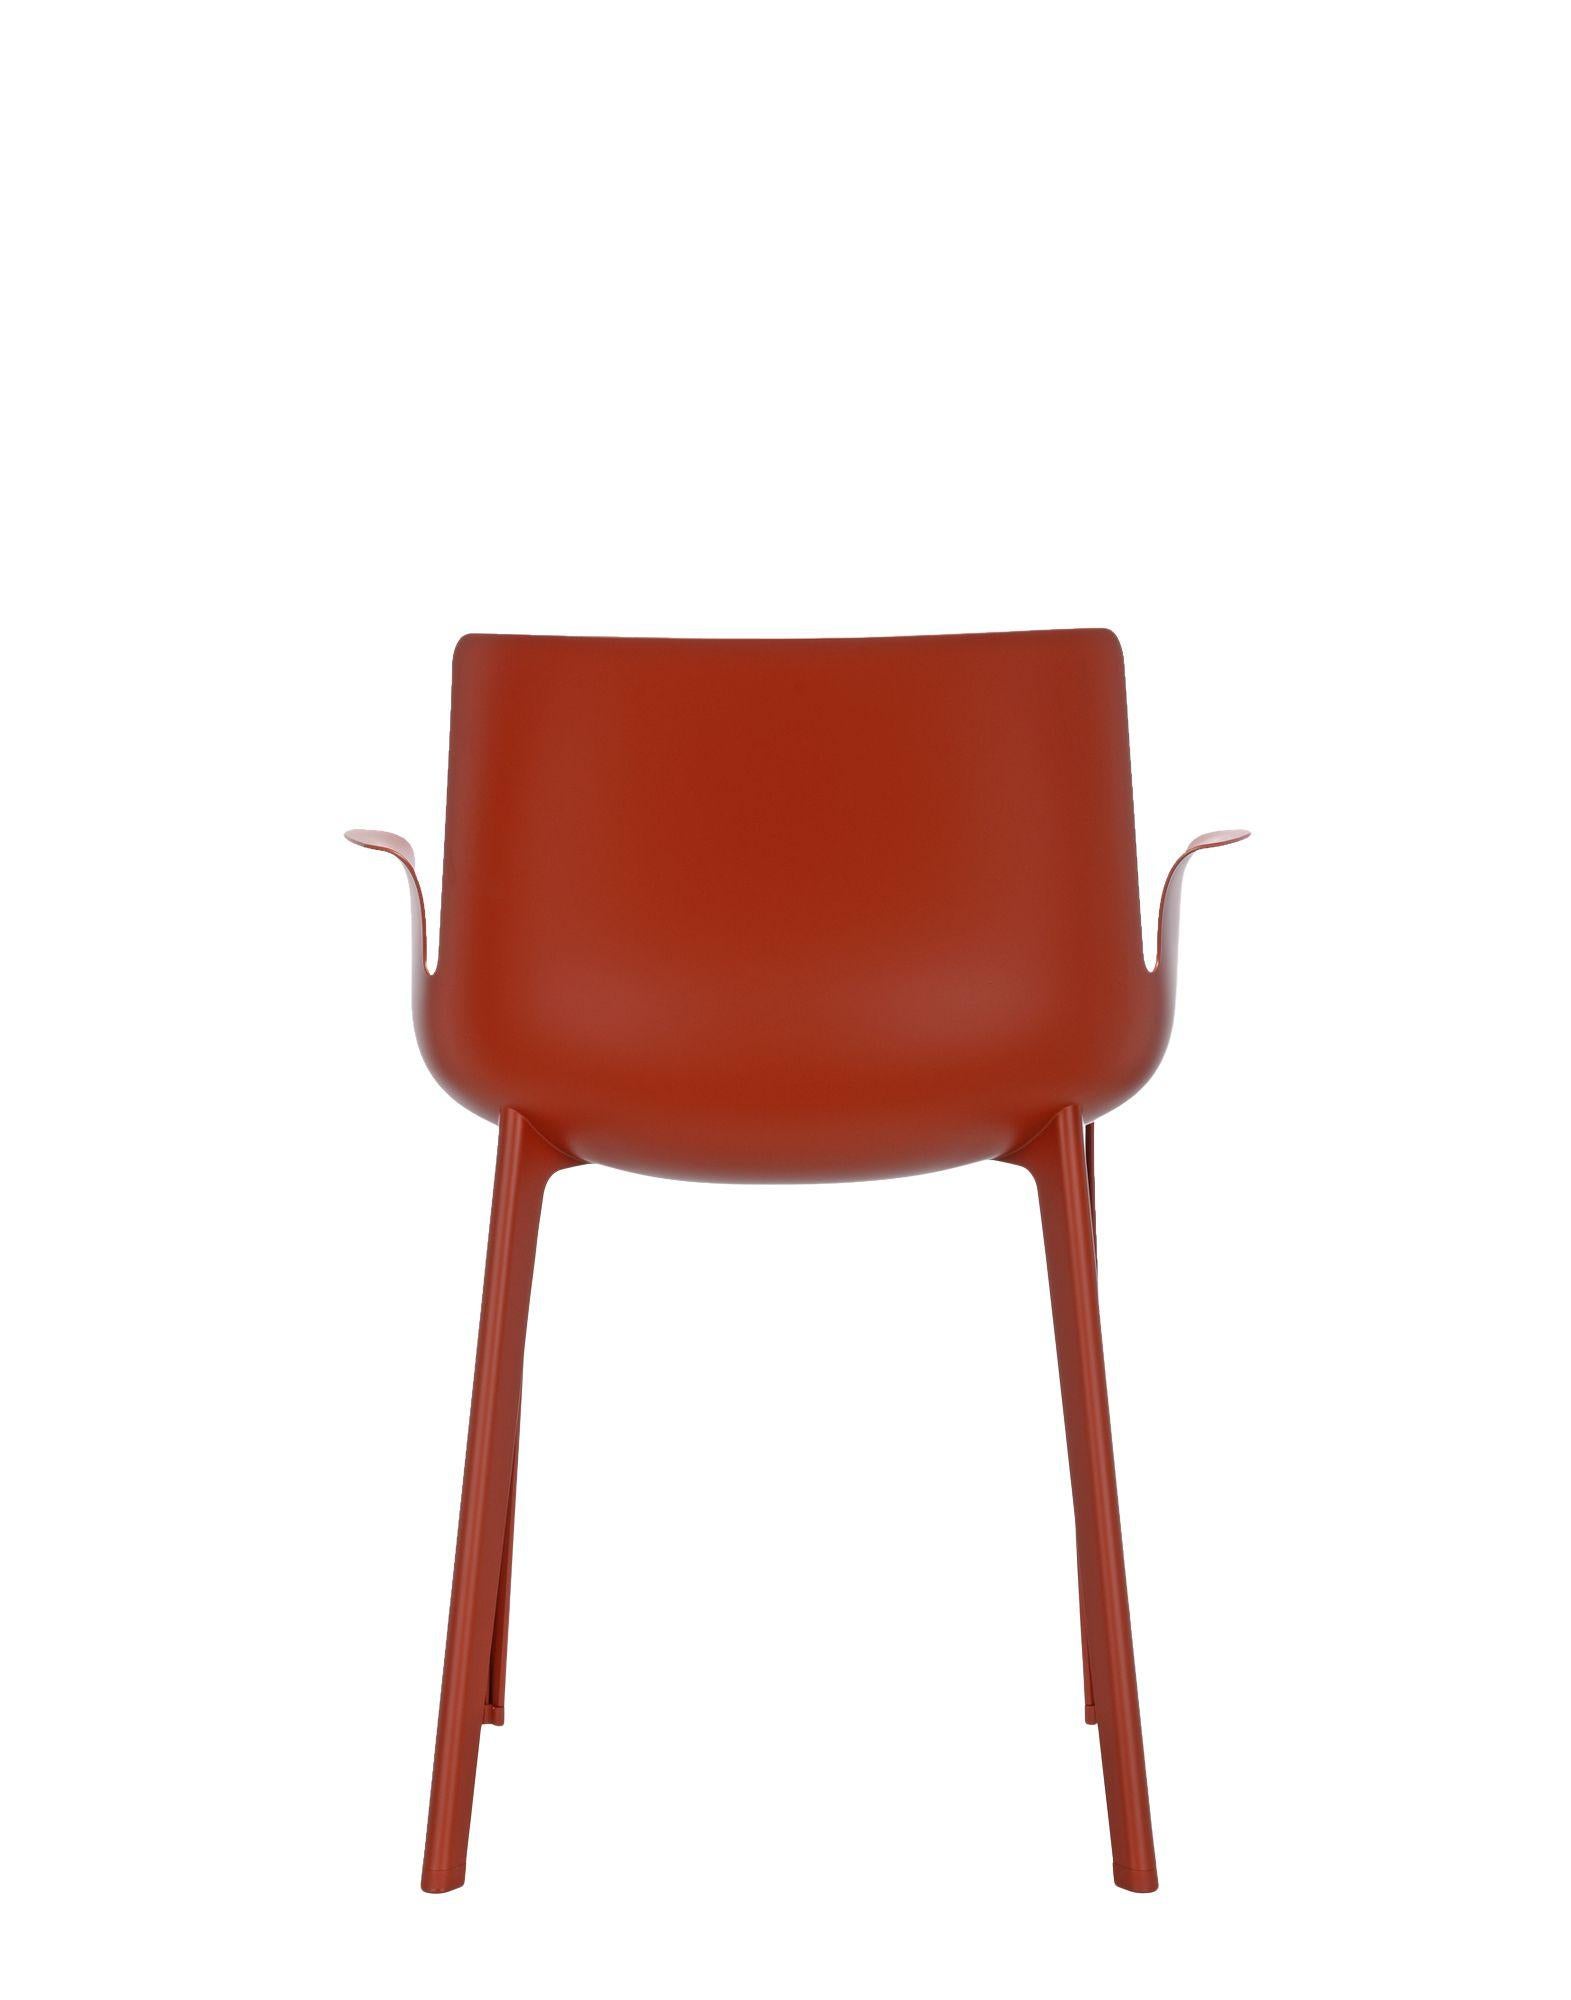 Italian Kartell Piuma Chair in Rusty Orange by Piero Lissoni For Sale